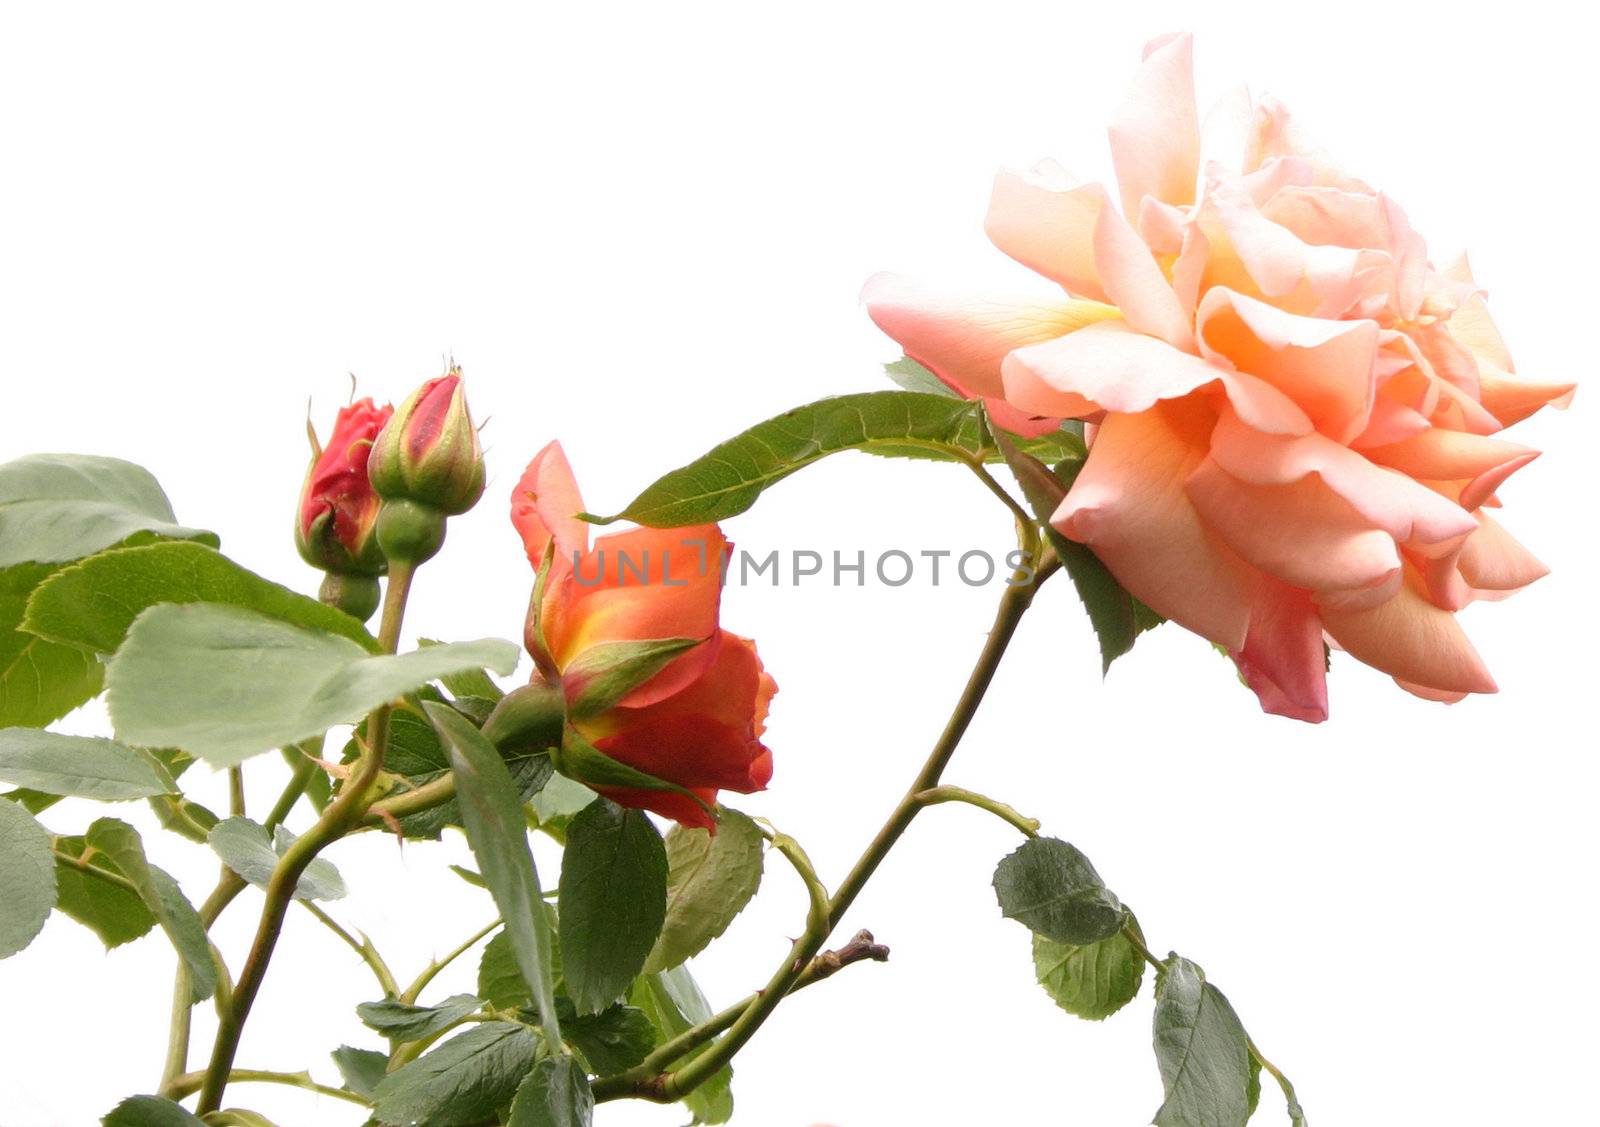 peach rose buds by leafy